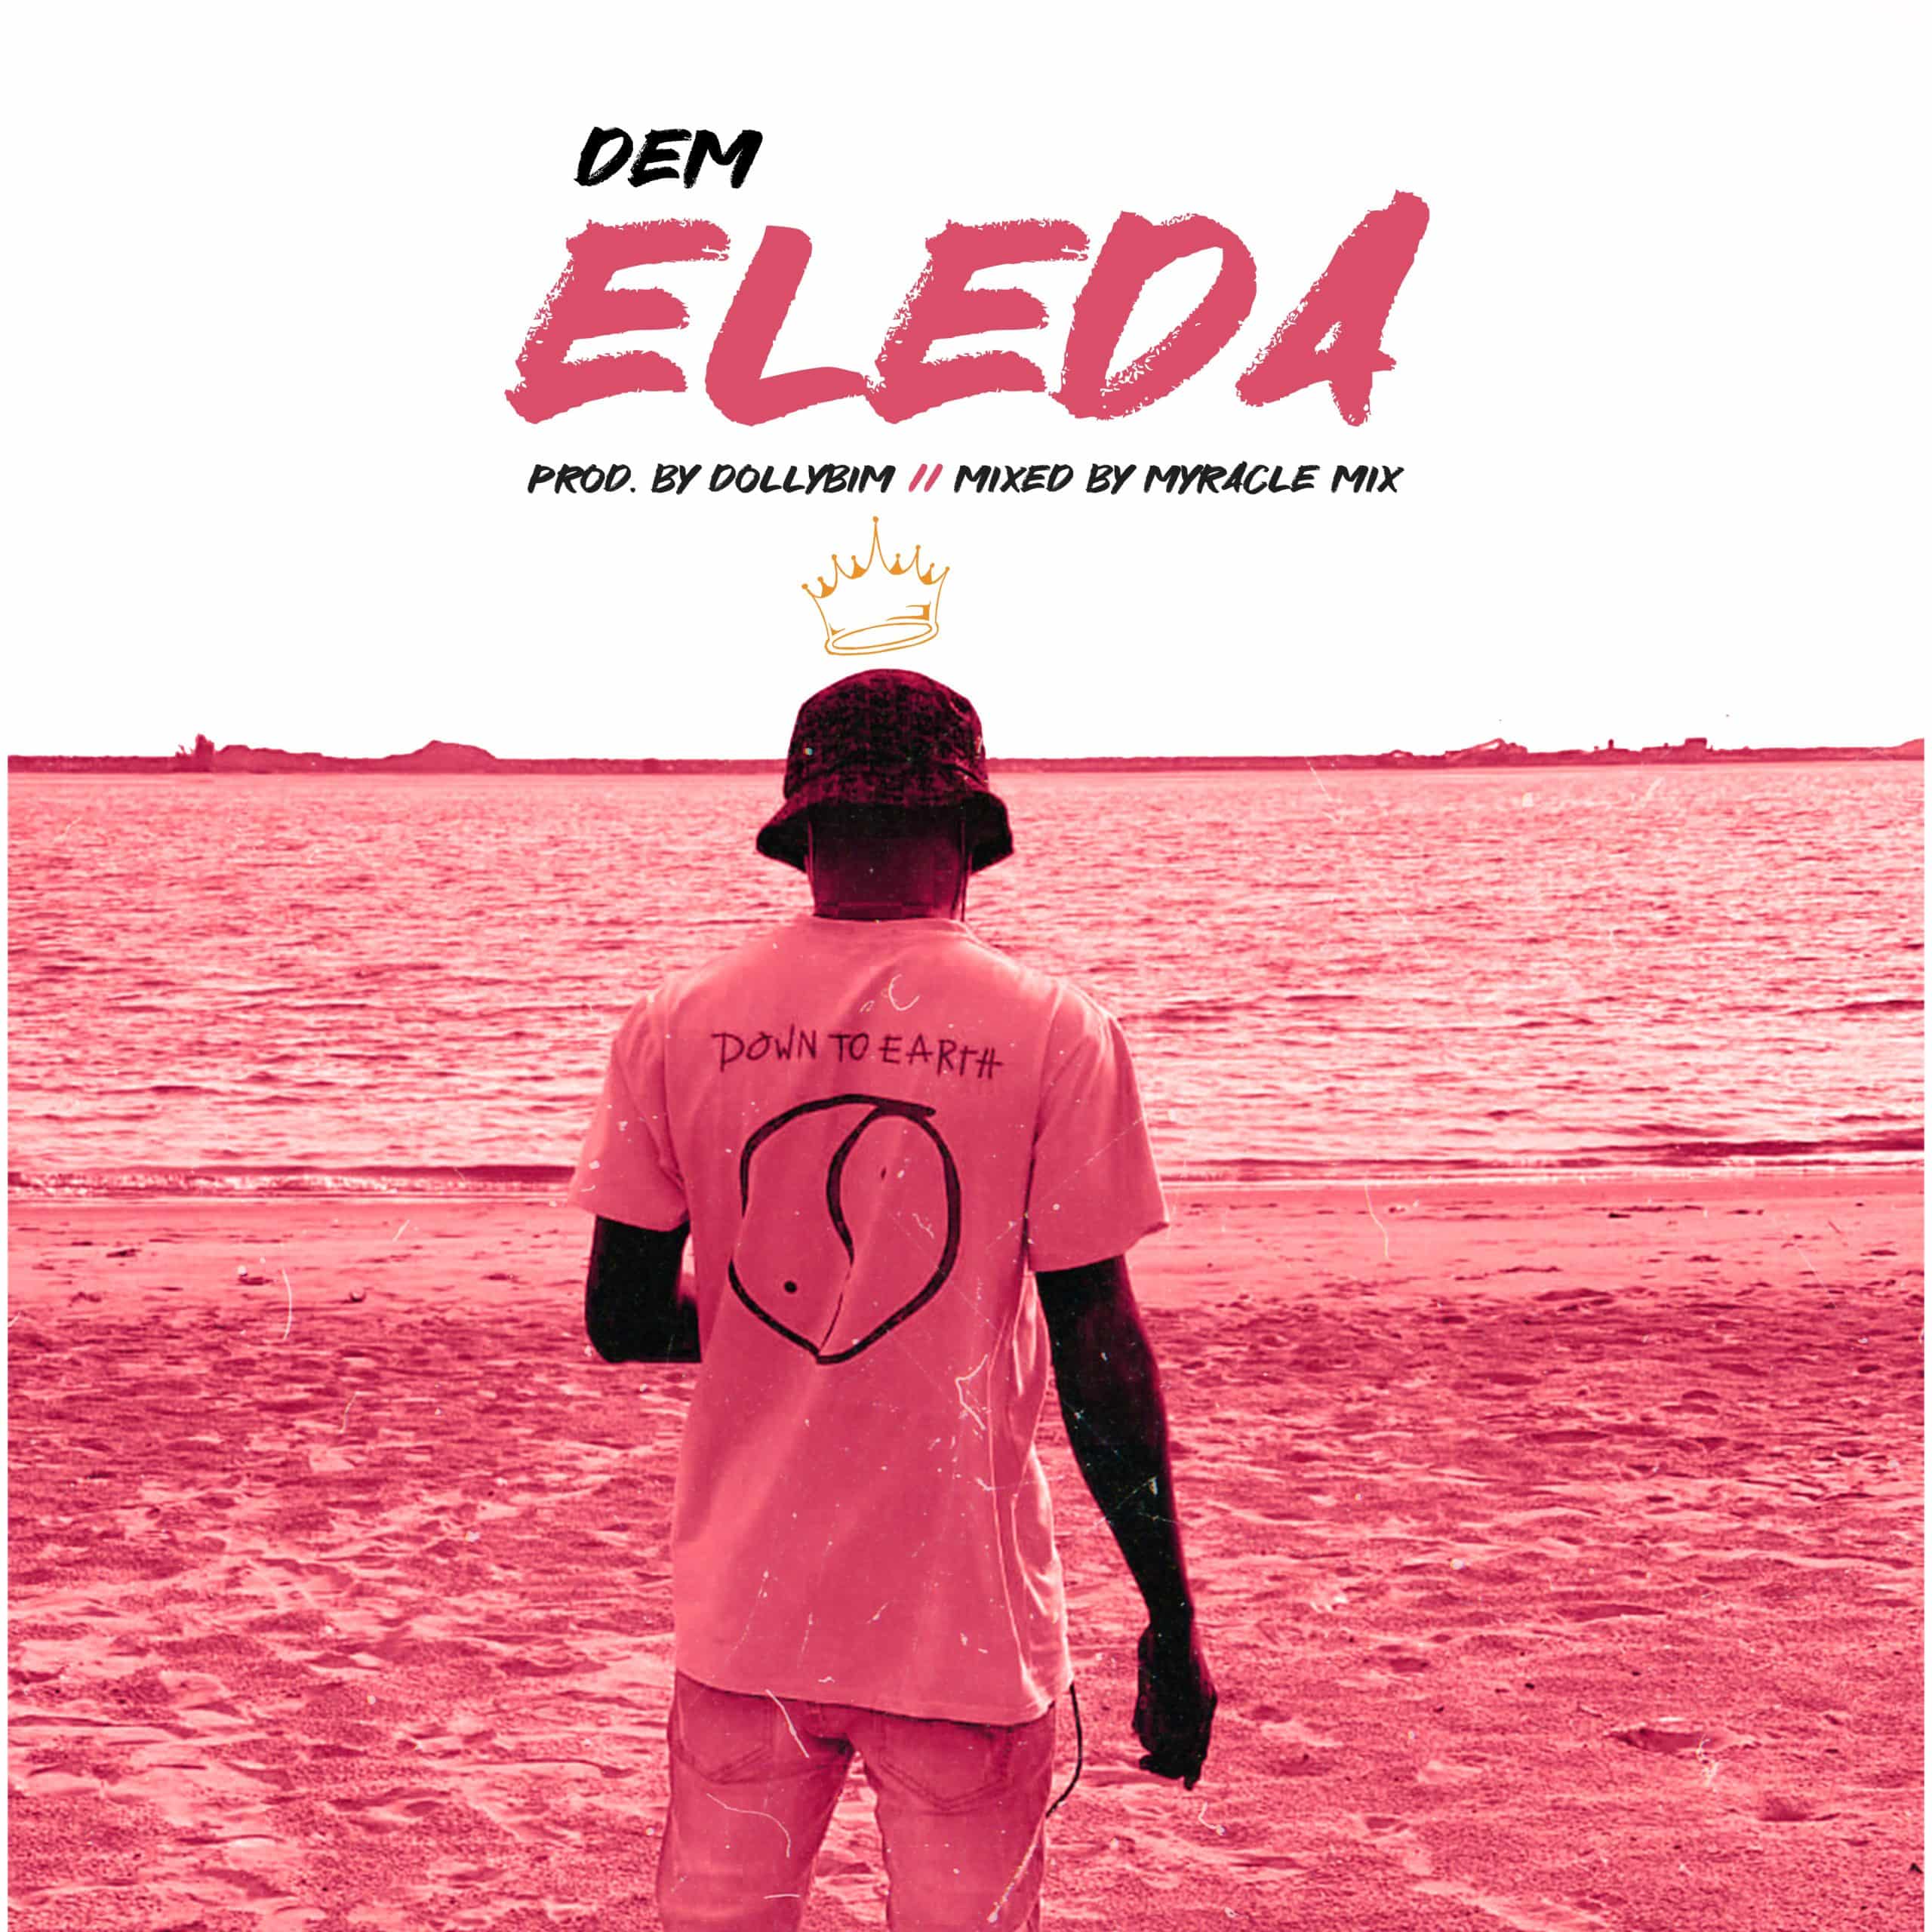 [[MUSIC] DEM4DEM – ELEDA